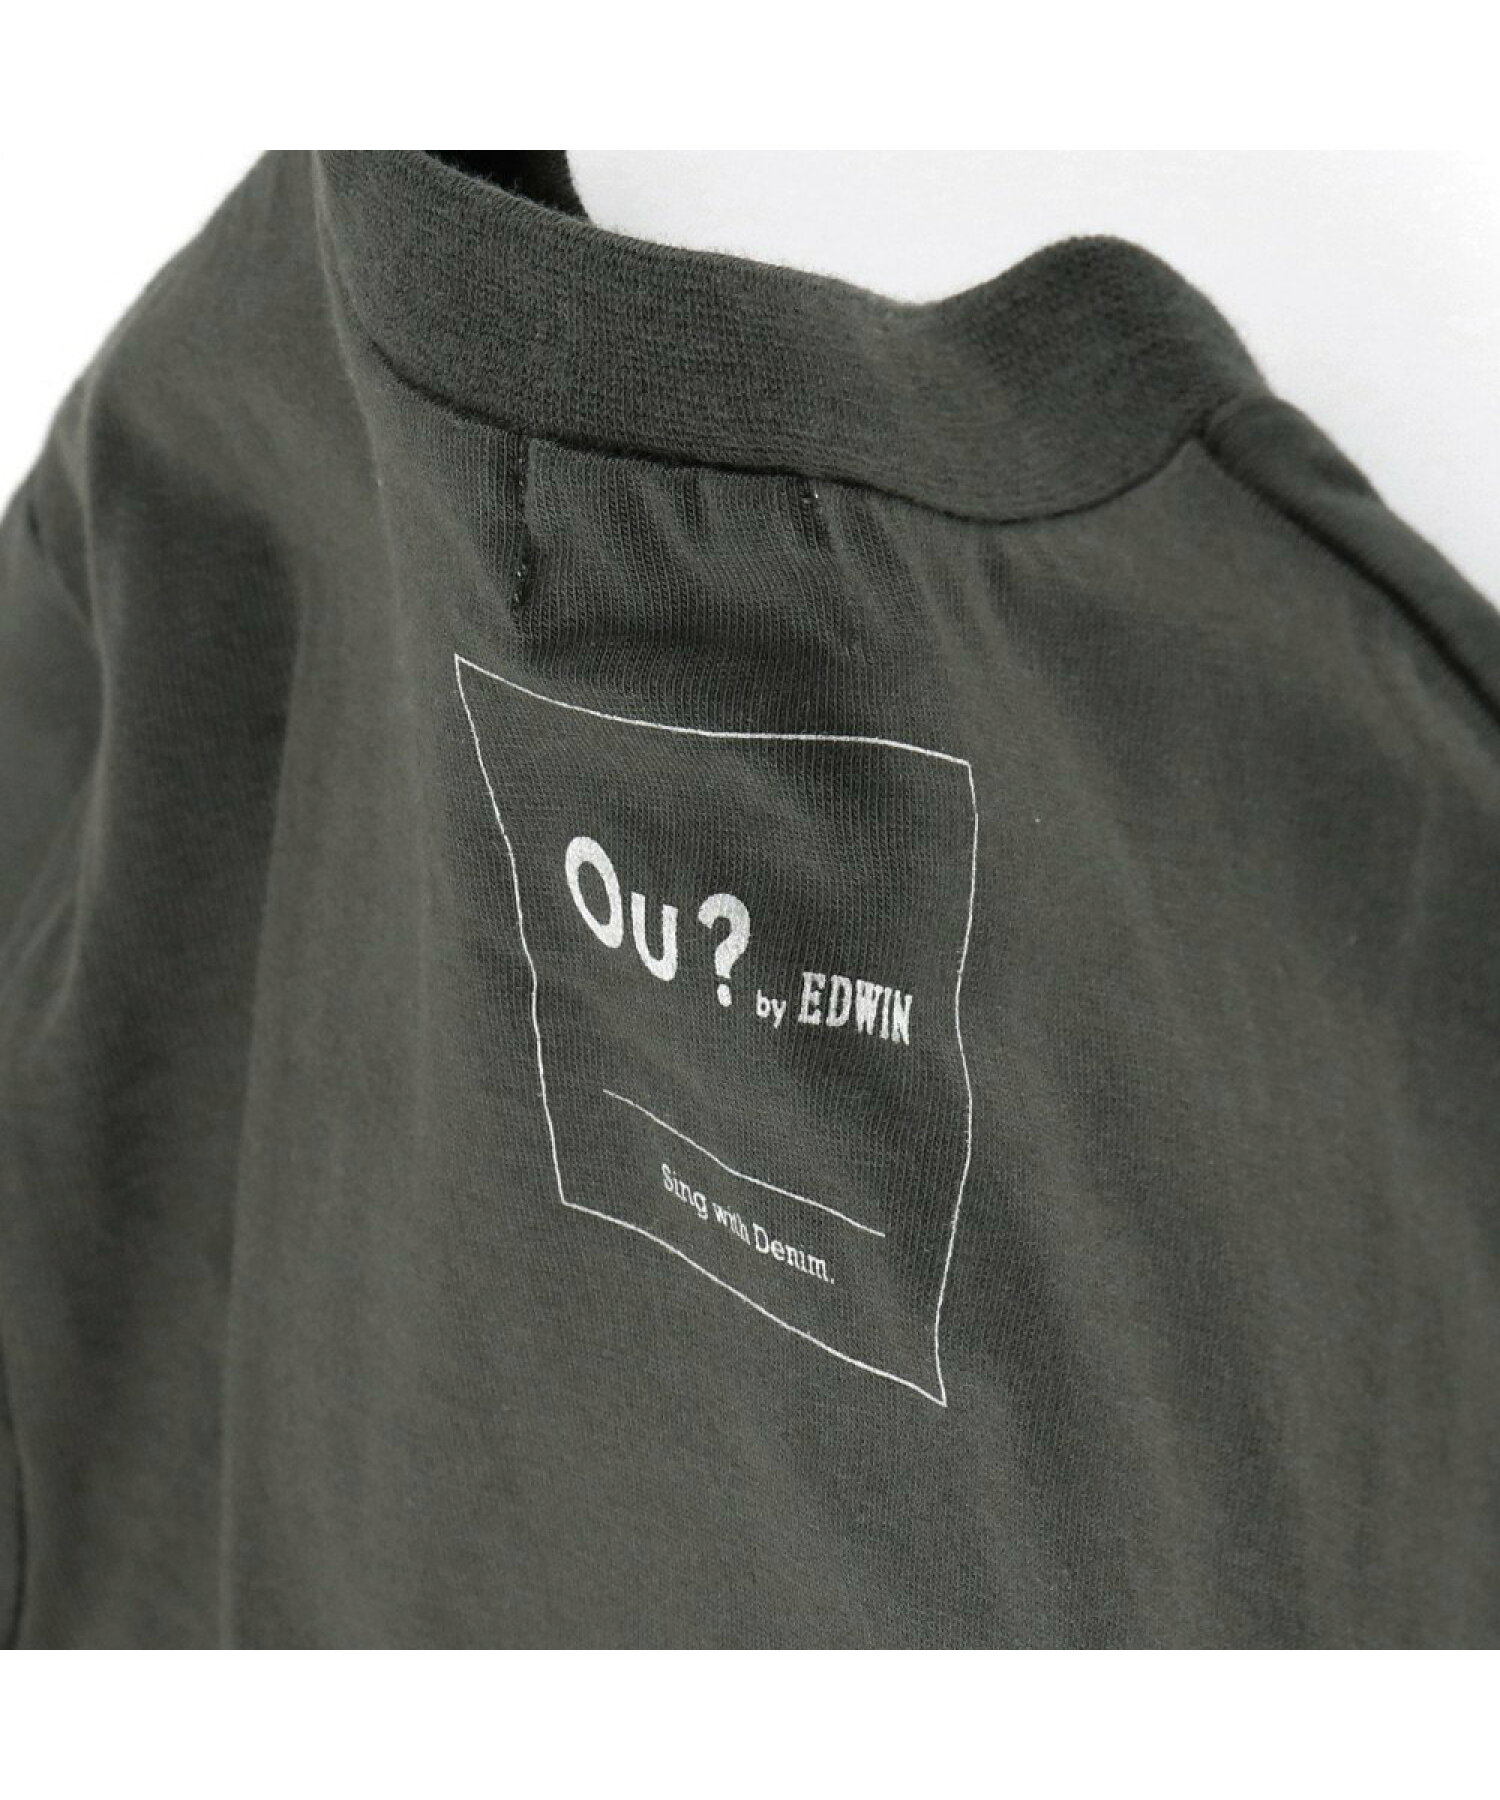 【Ou? by EDWIN】アソート長袖Tシャツ